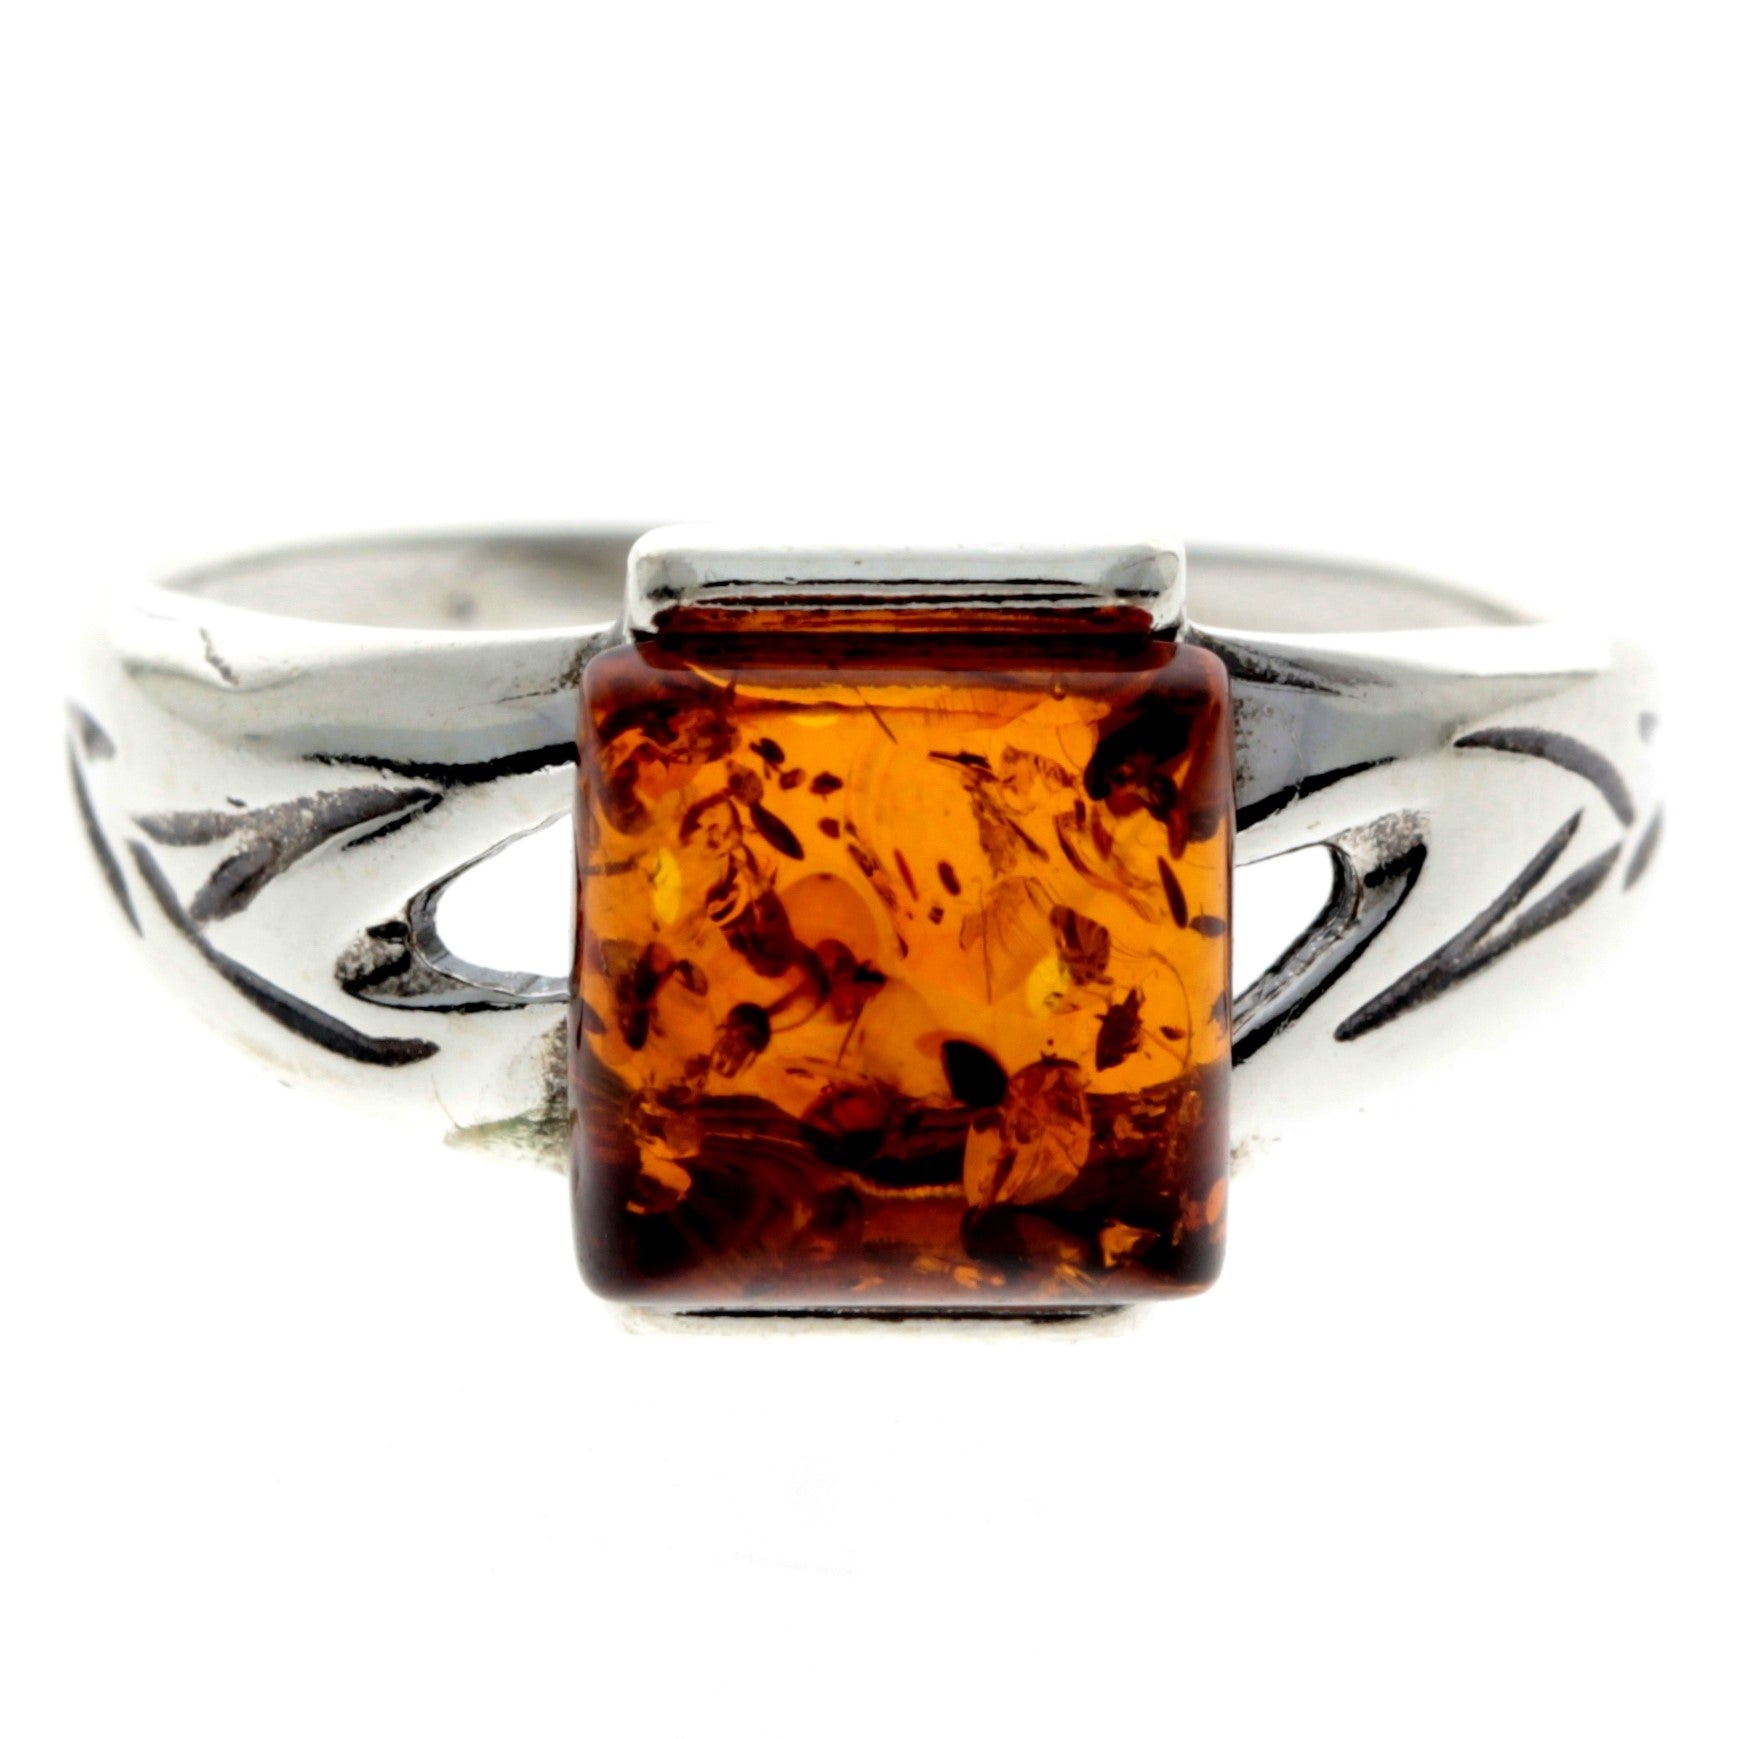 925 Sterling Silver & Baltic Amber Modern Designer Ring - 7027